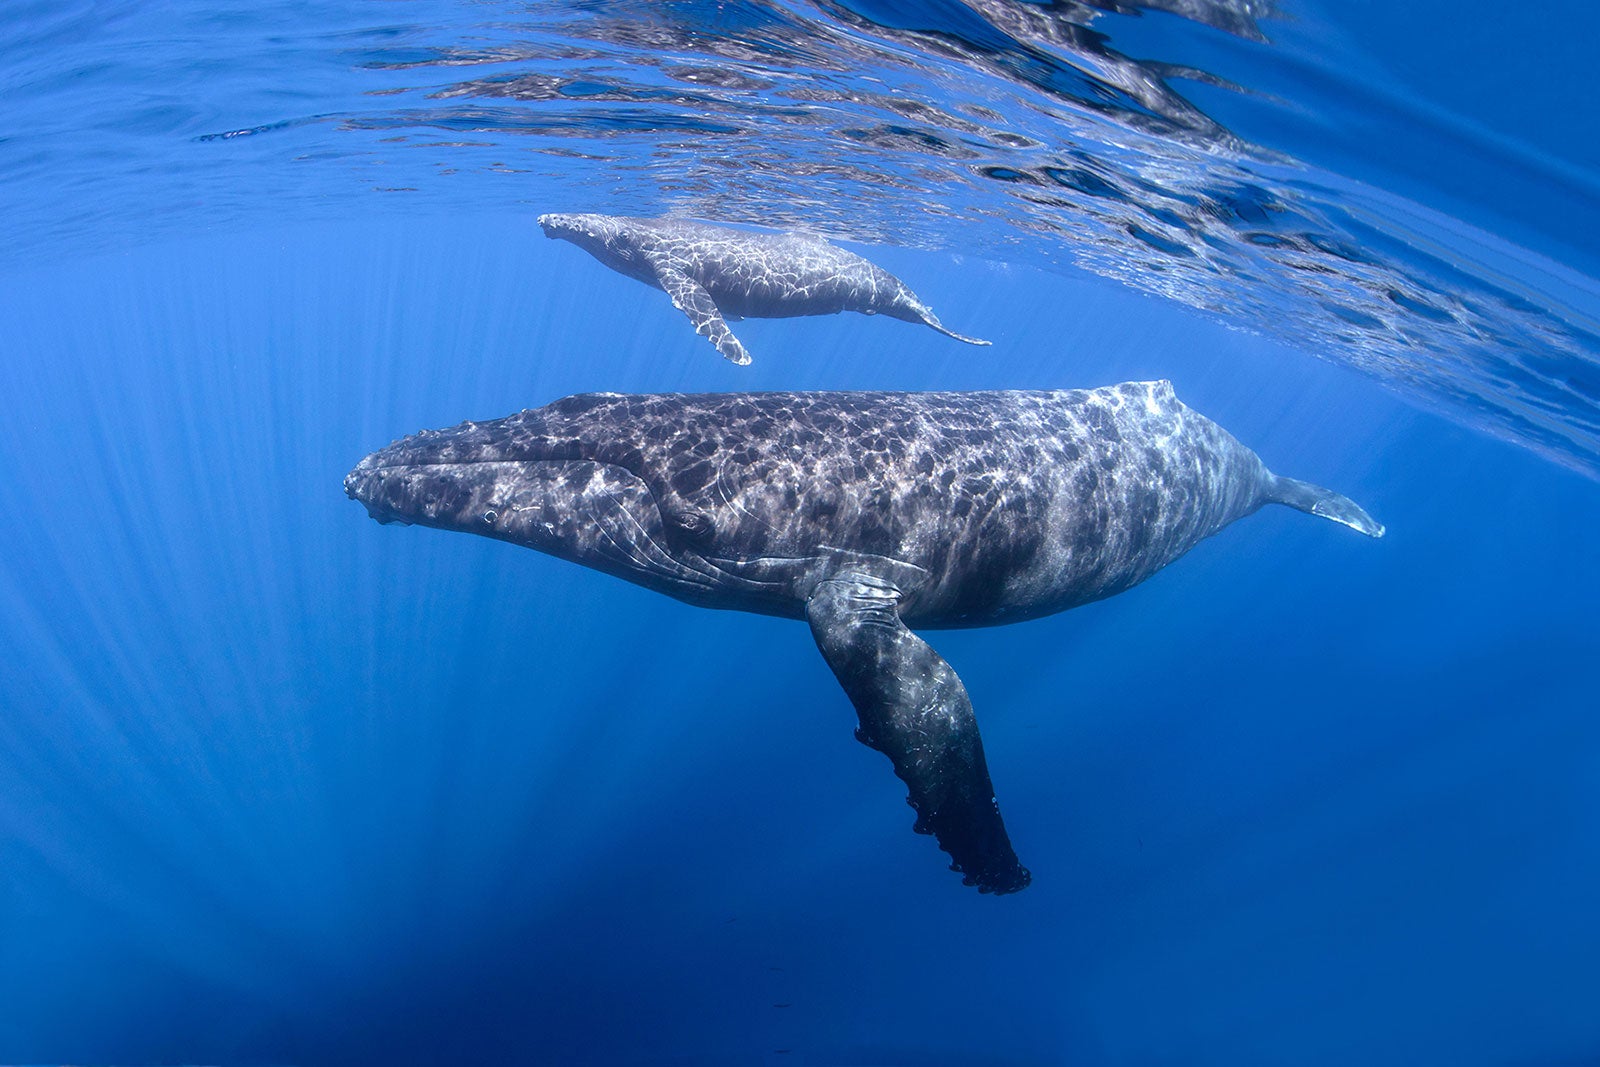 Protecting Marine Wildlife | The Humane Society of the United States